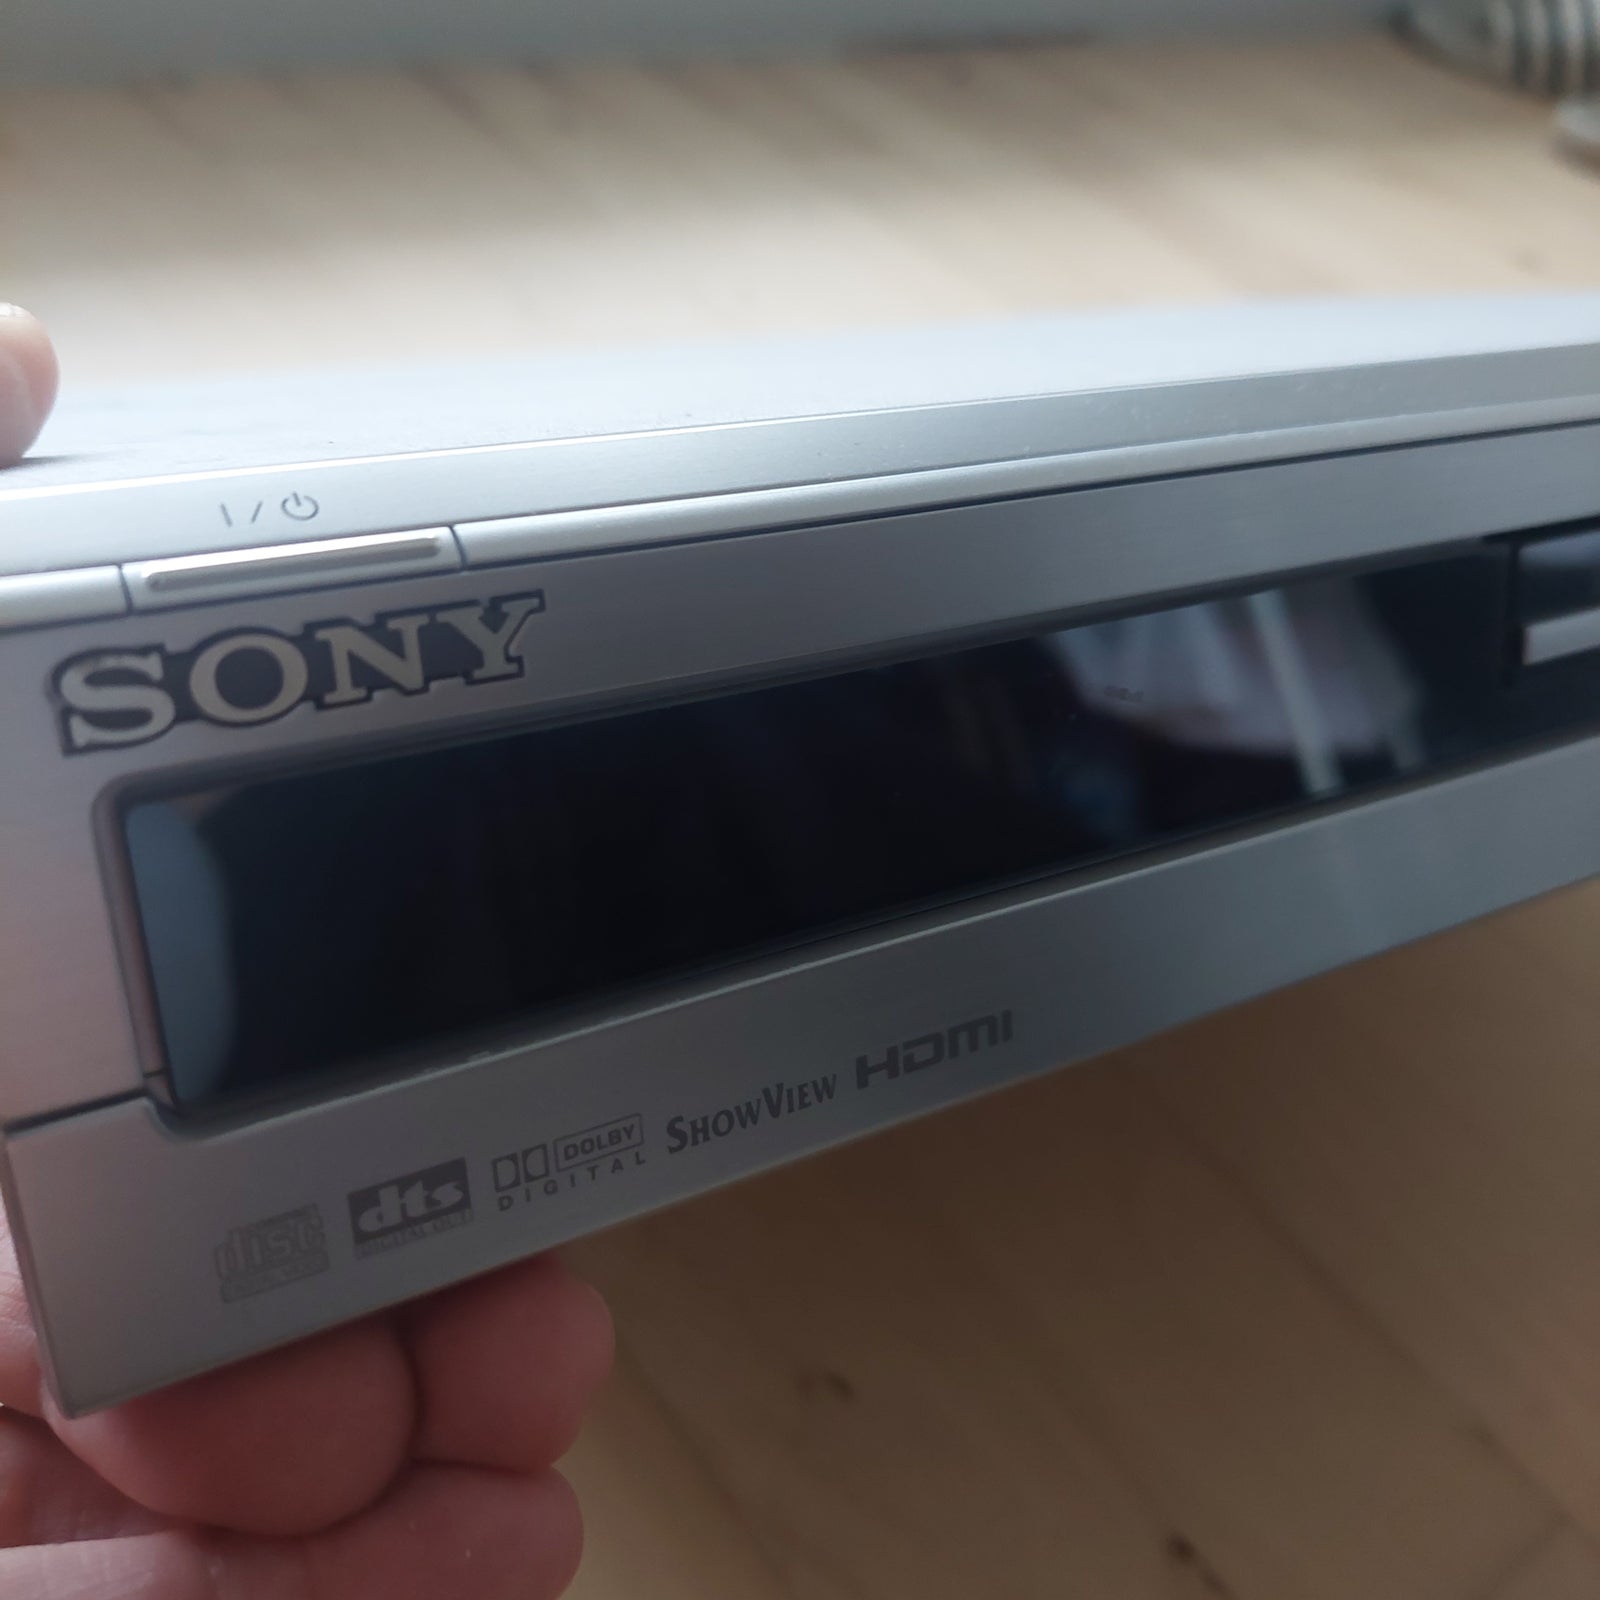 Sony, RDR-HX1010, Harddisk/dvd-optager